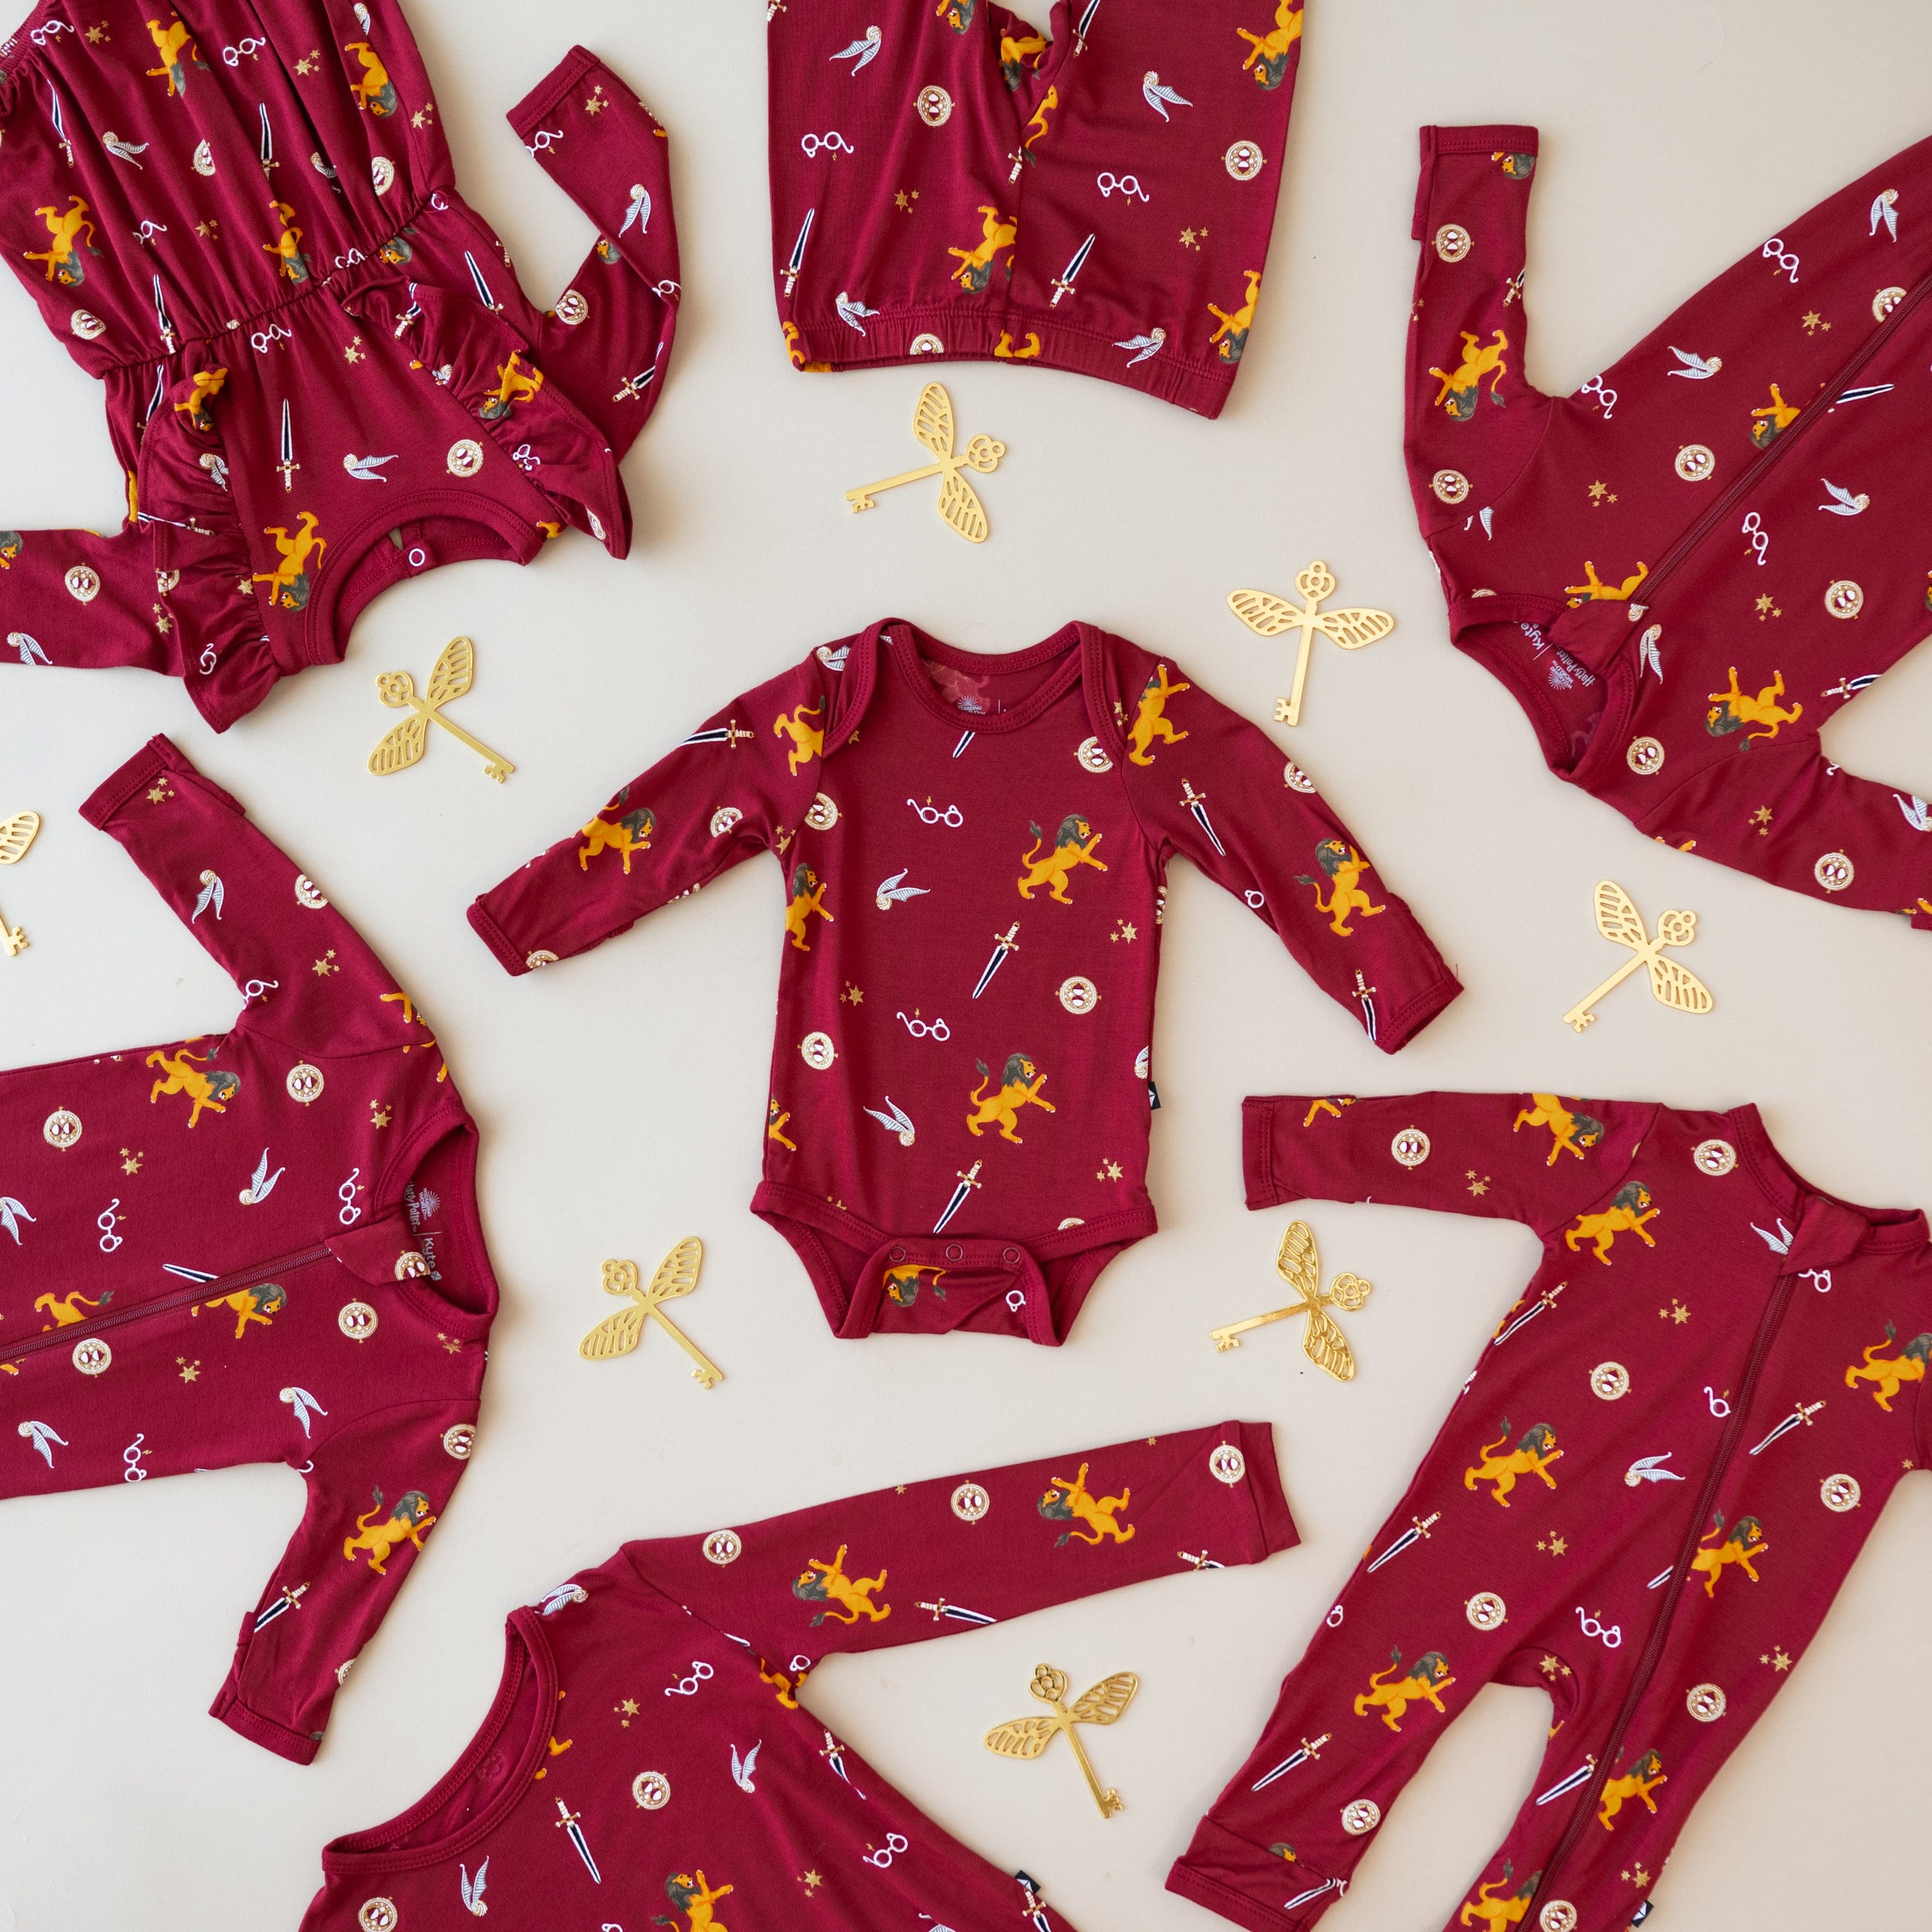 Kyte BABY Toddler Long Sleeve Pajamas Long Sleeve Pajamas in Gryffindor™